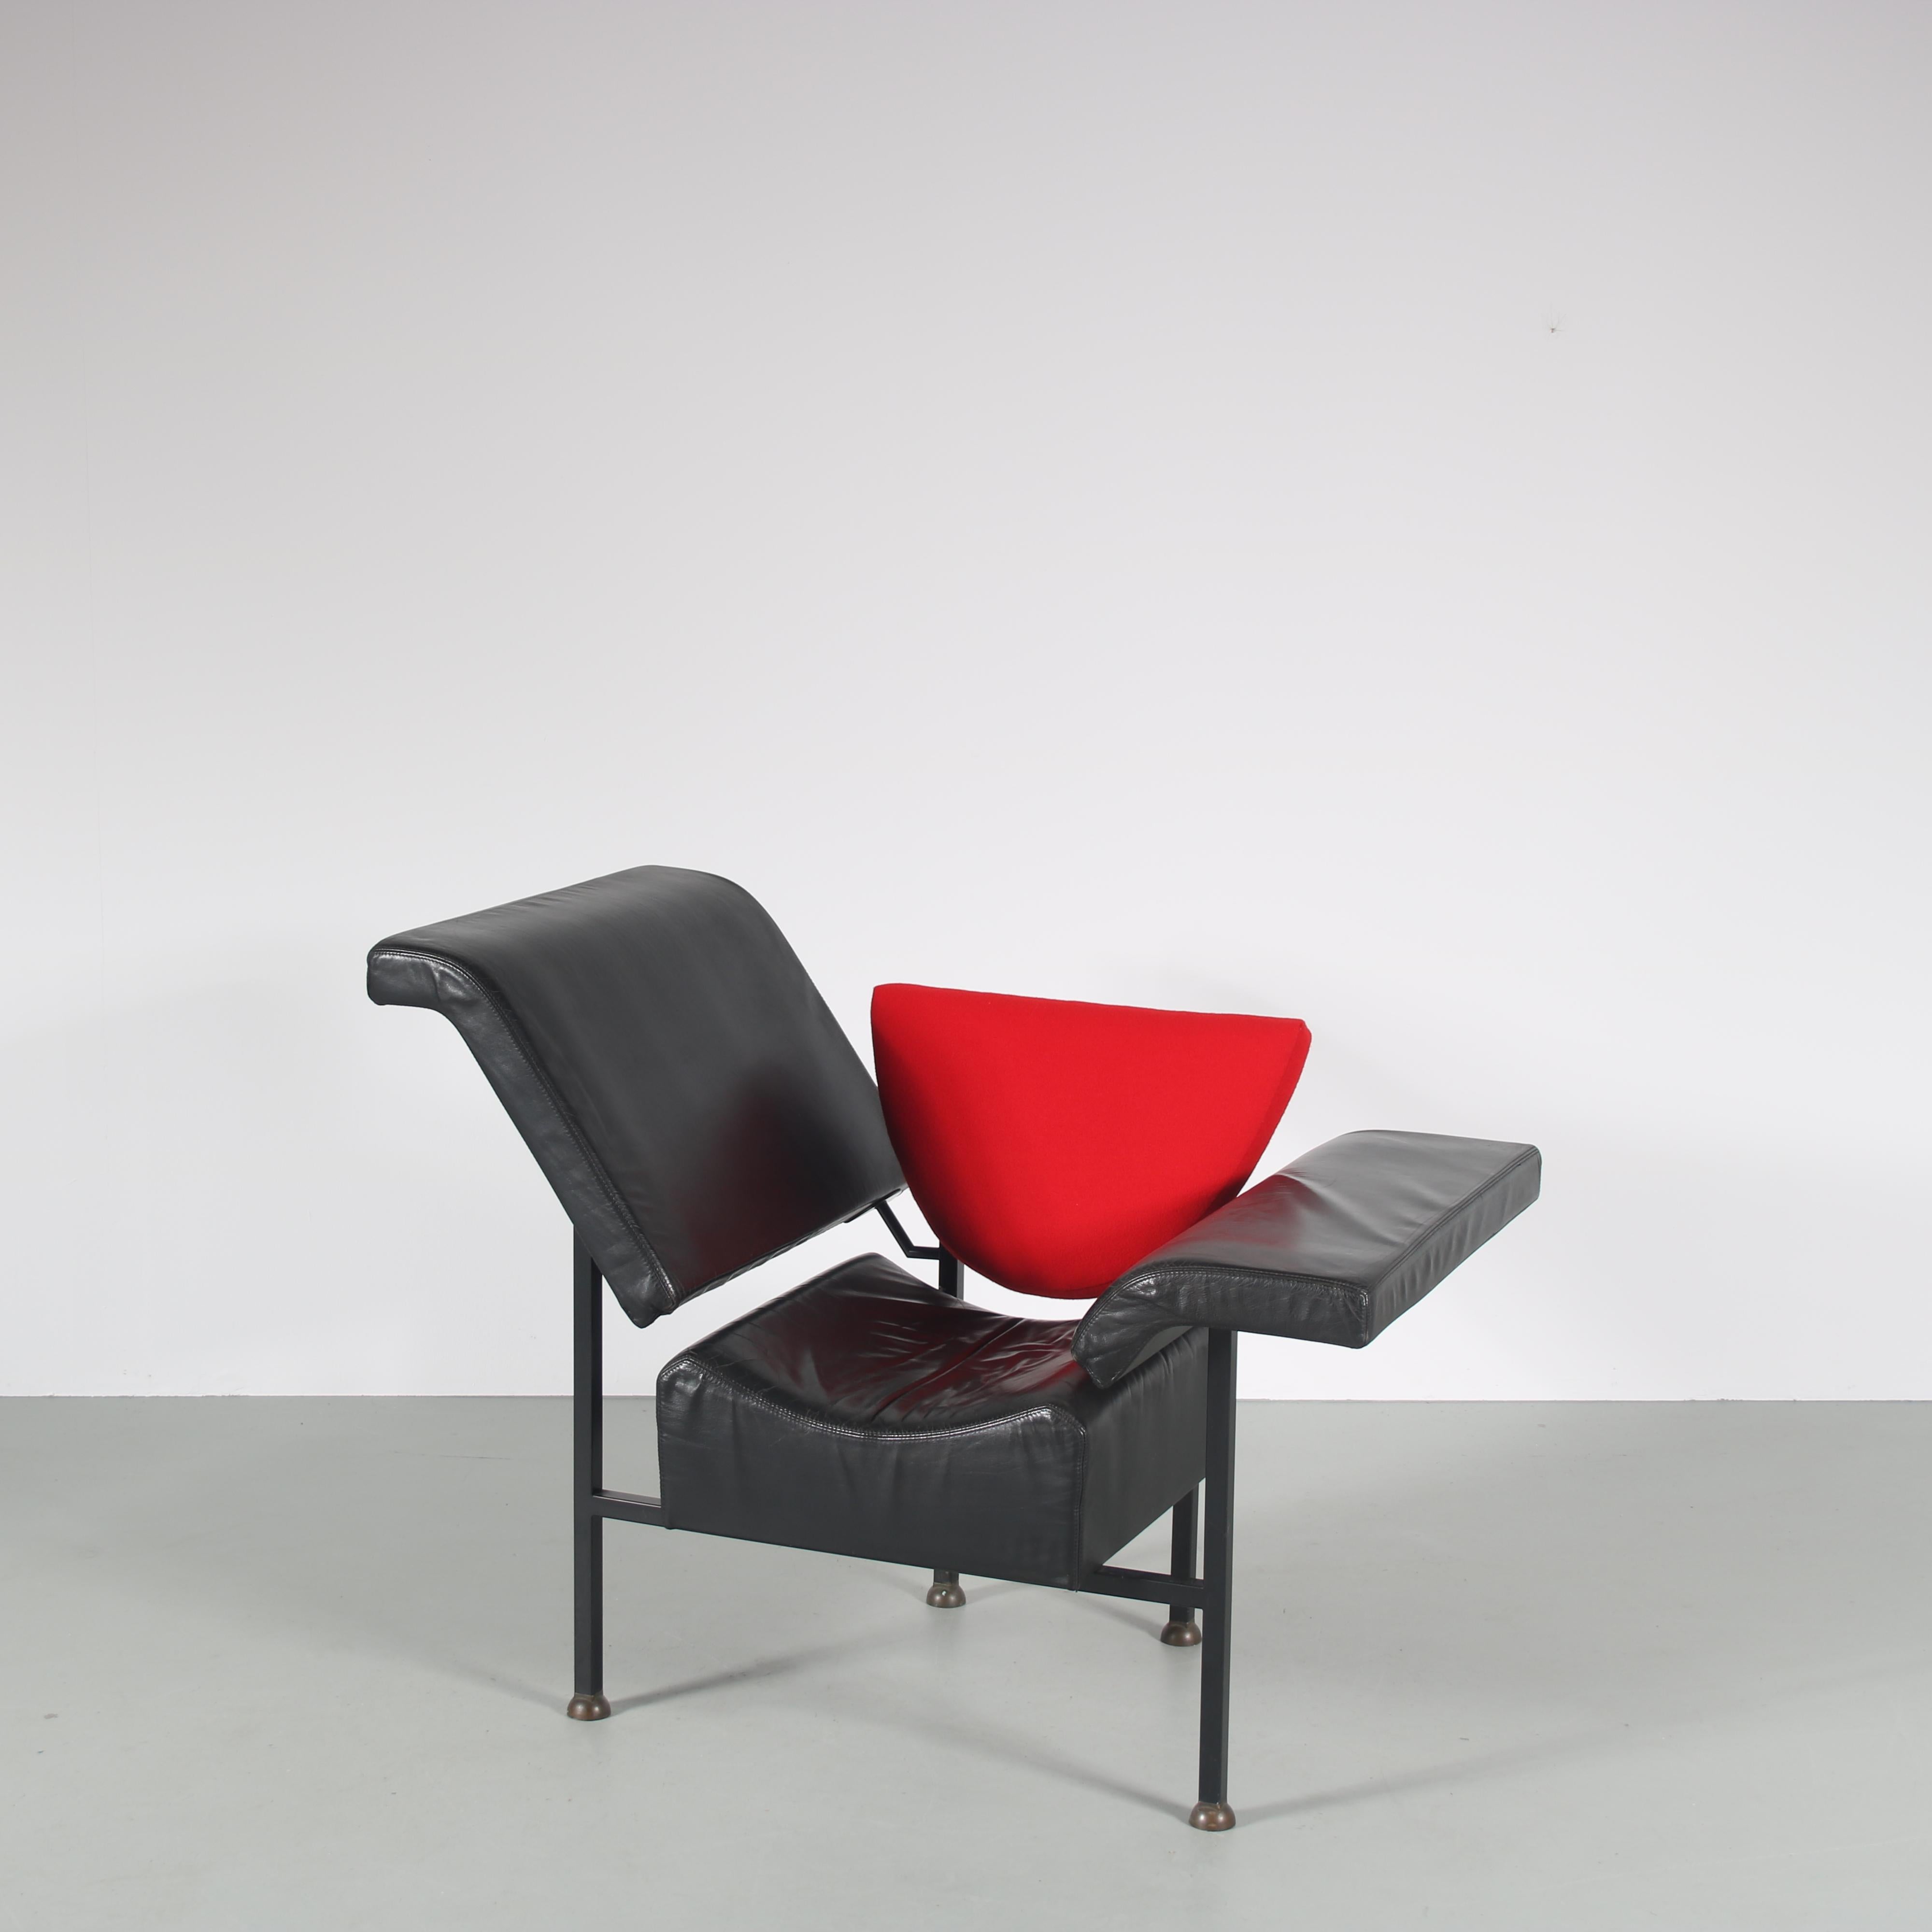 Dutch “Groeten Uit Holland” Chair by Rob Eckhardt for Pastoe, Netherlands, 1980